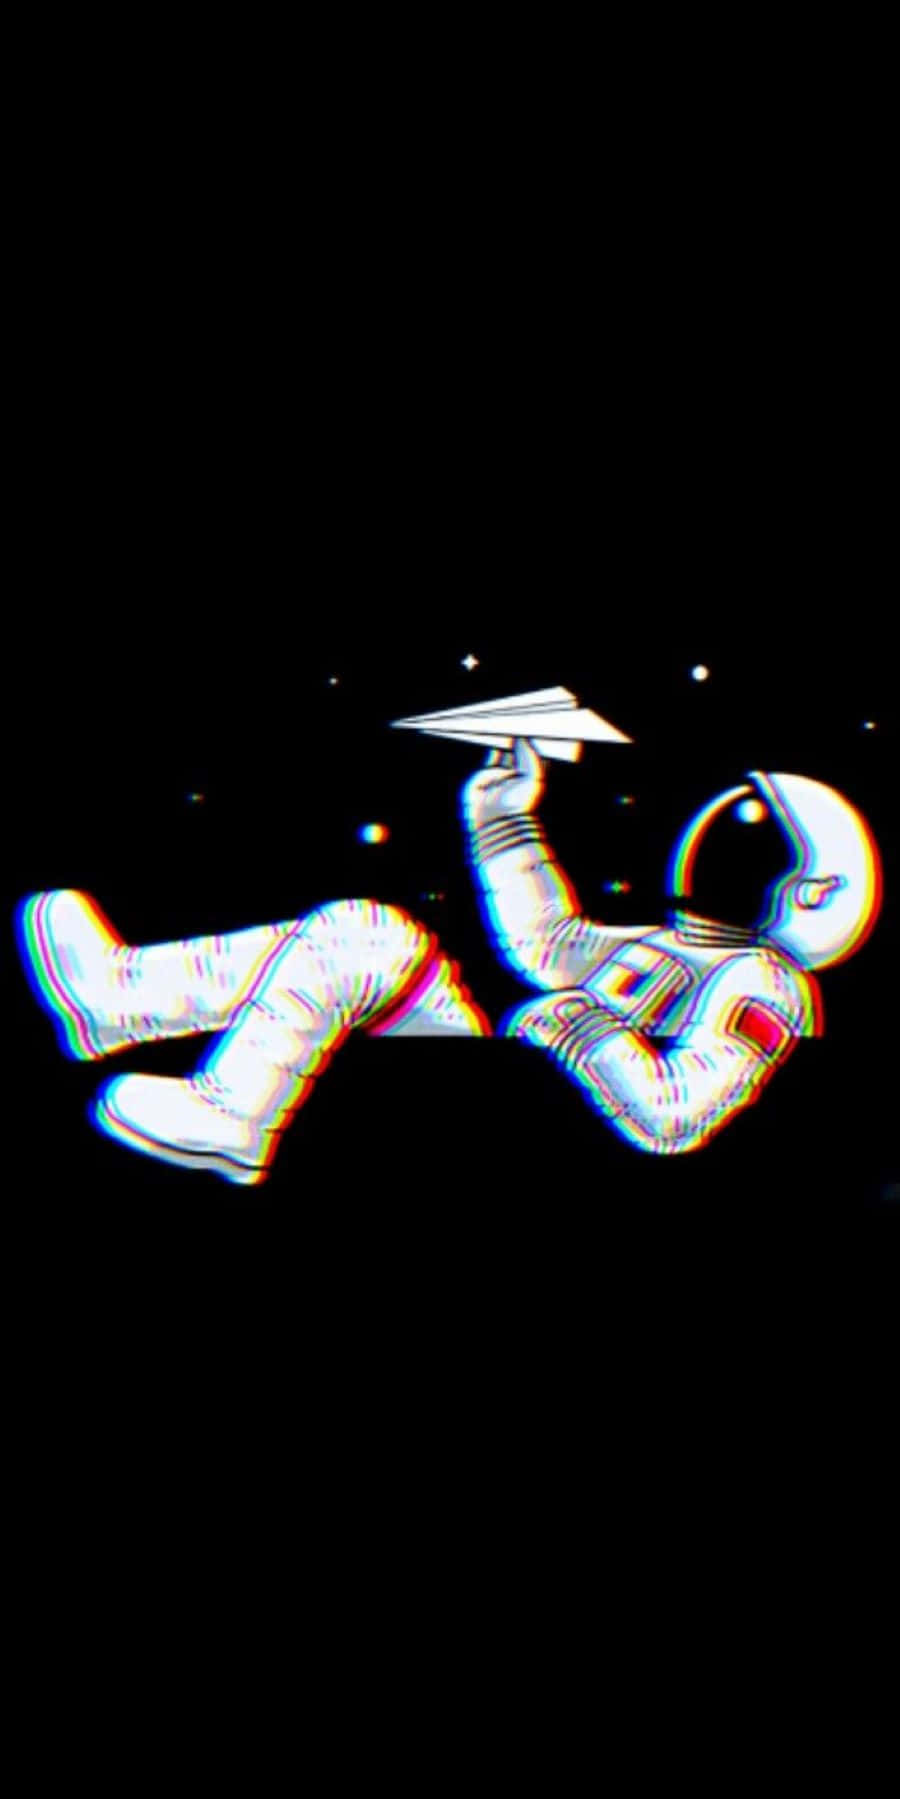 Astronaut Paper Plane Glitch Art Wallpaper